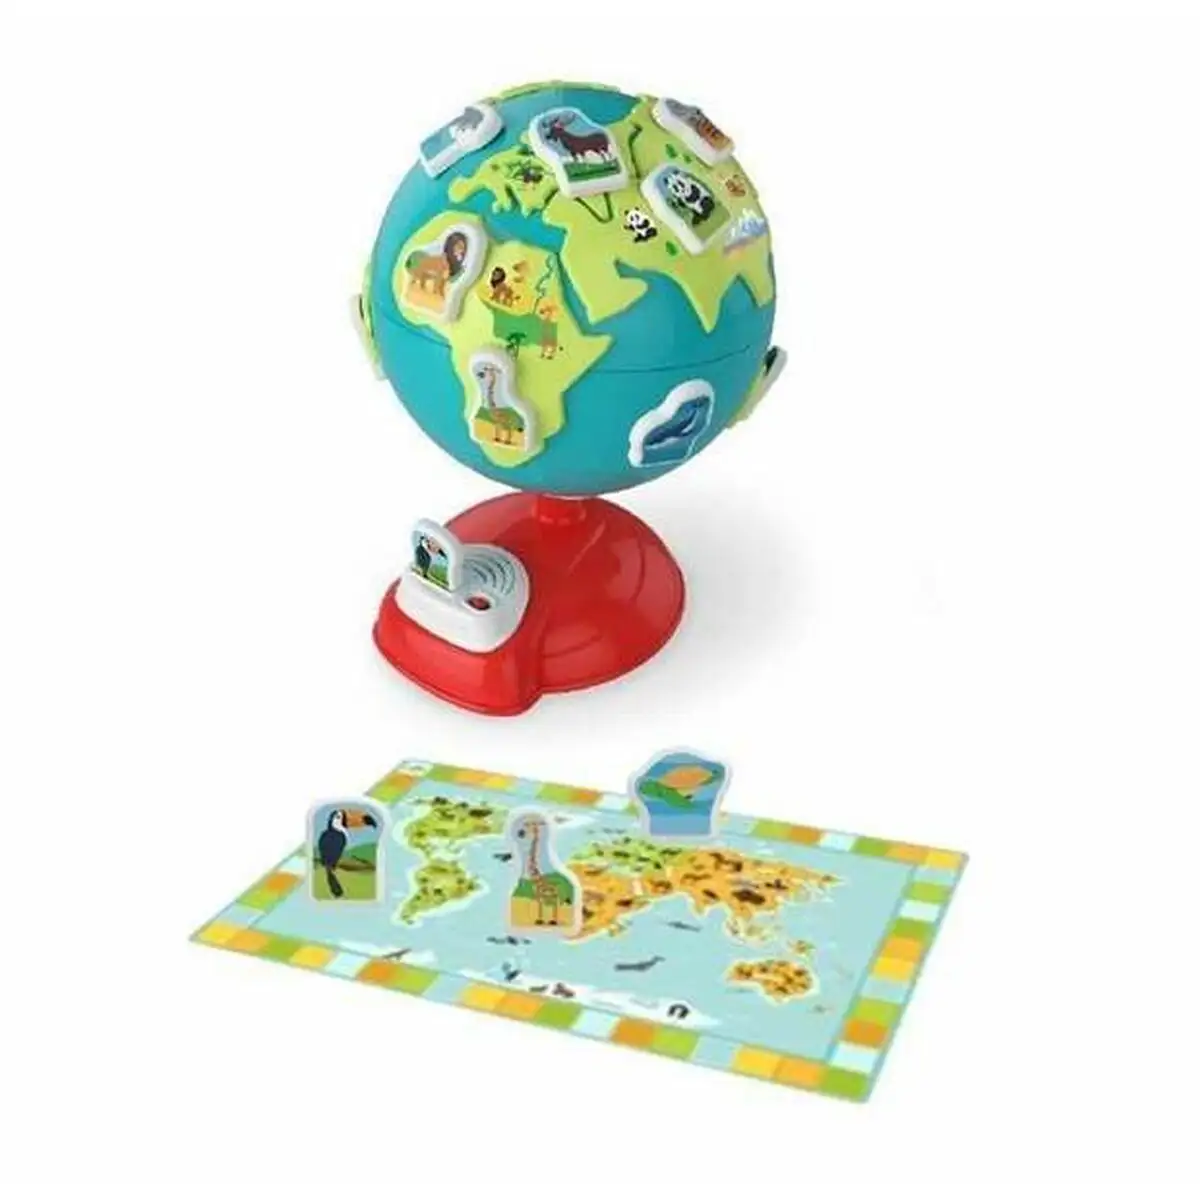 https://diaytar.com/wp-content/uploads/image_d/jouet-educatif-clementoni-earth-globe-terrestre_5275.webp